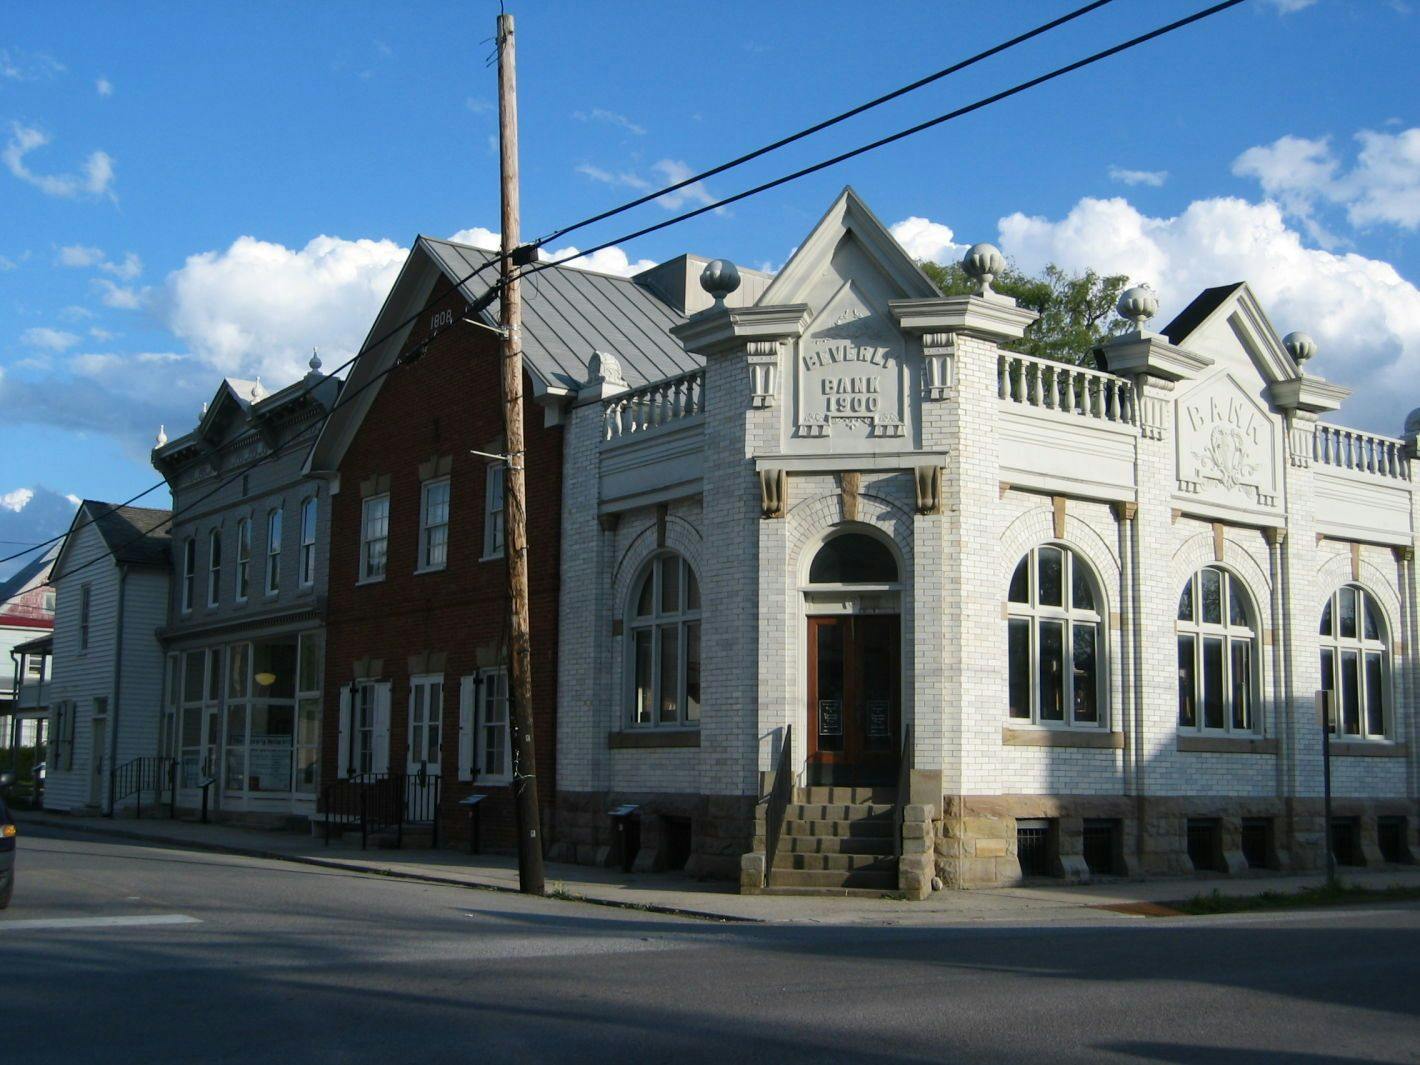 Beverly Heritage Center